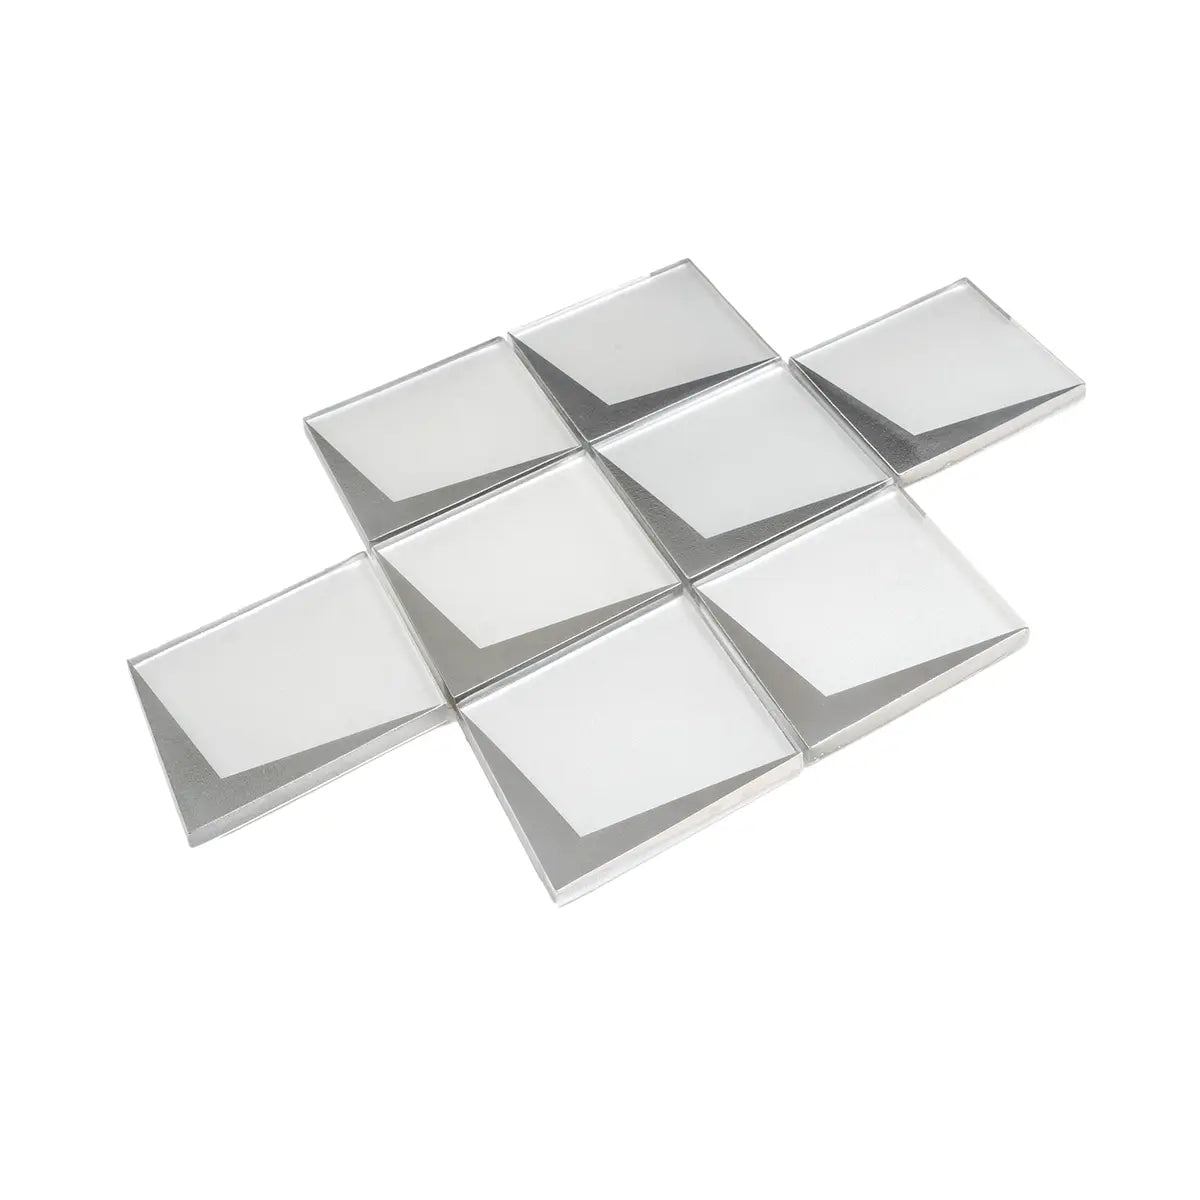 White Frost Diamond Glass Mosaic Tile